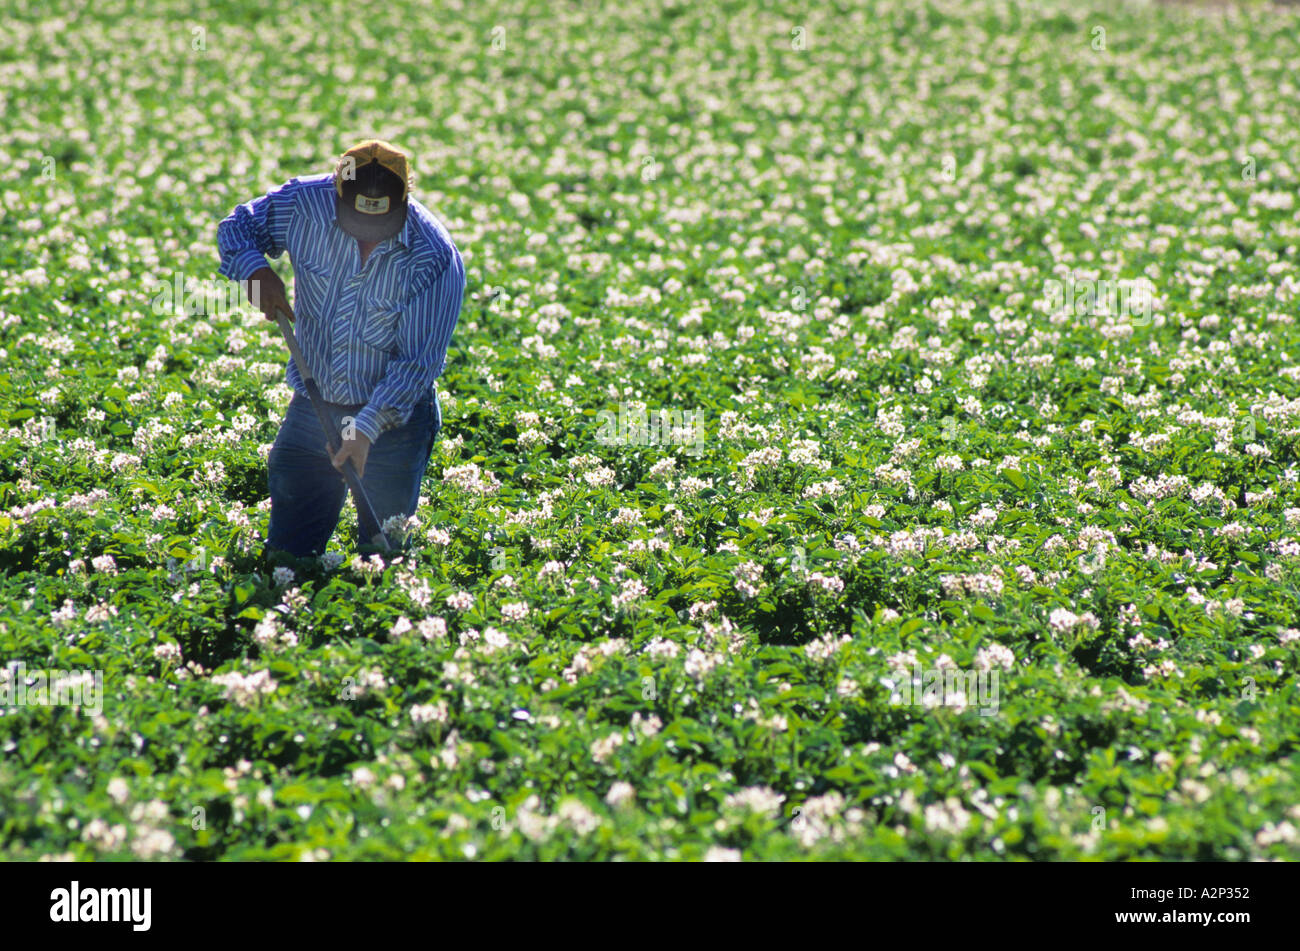 Farmer working in an Idaho potato field  Stock Photo